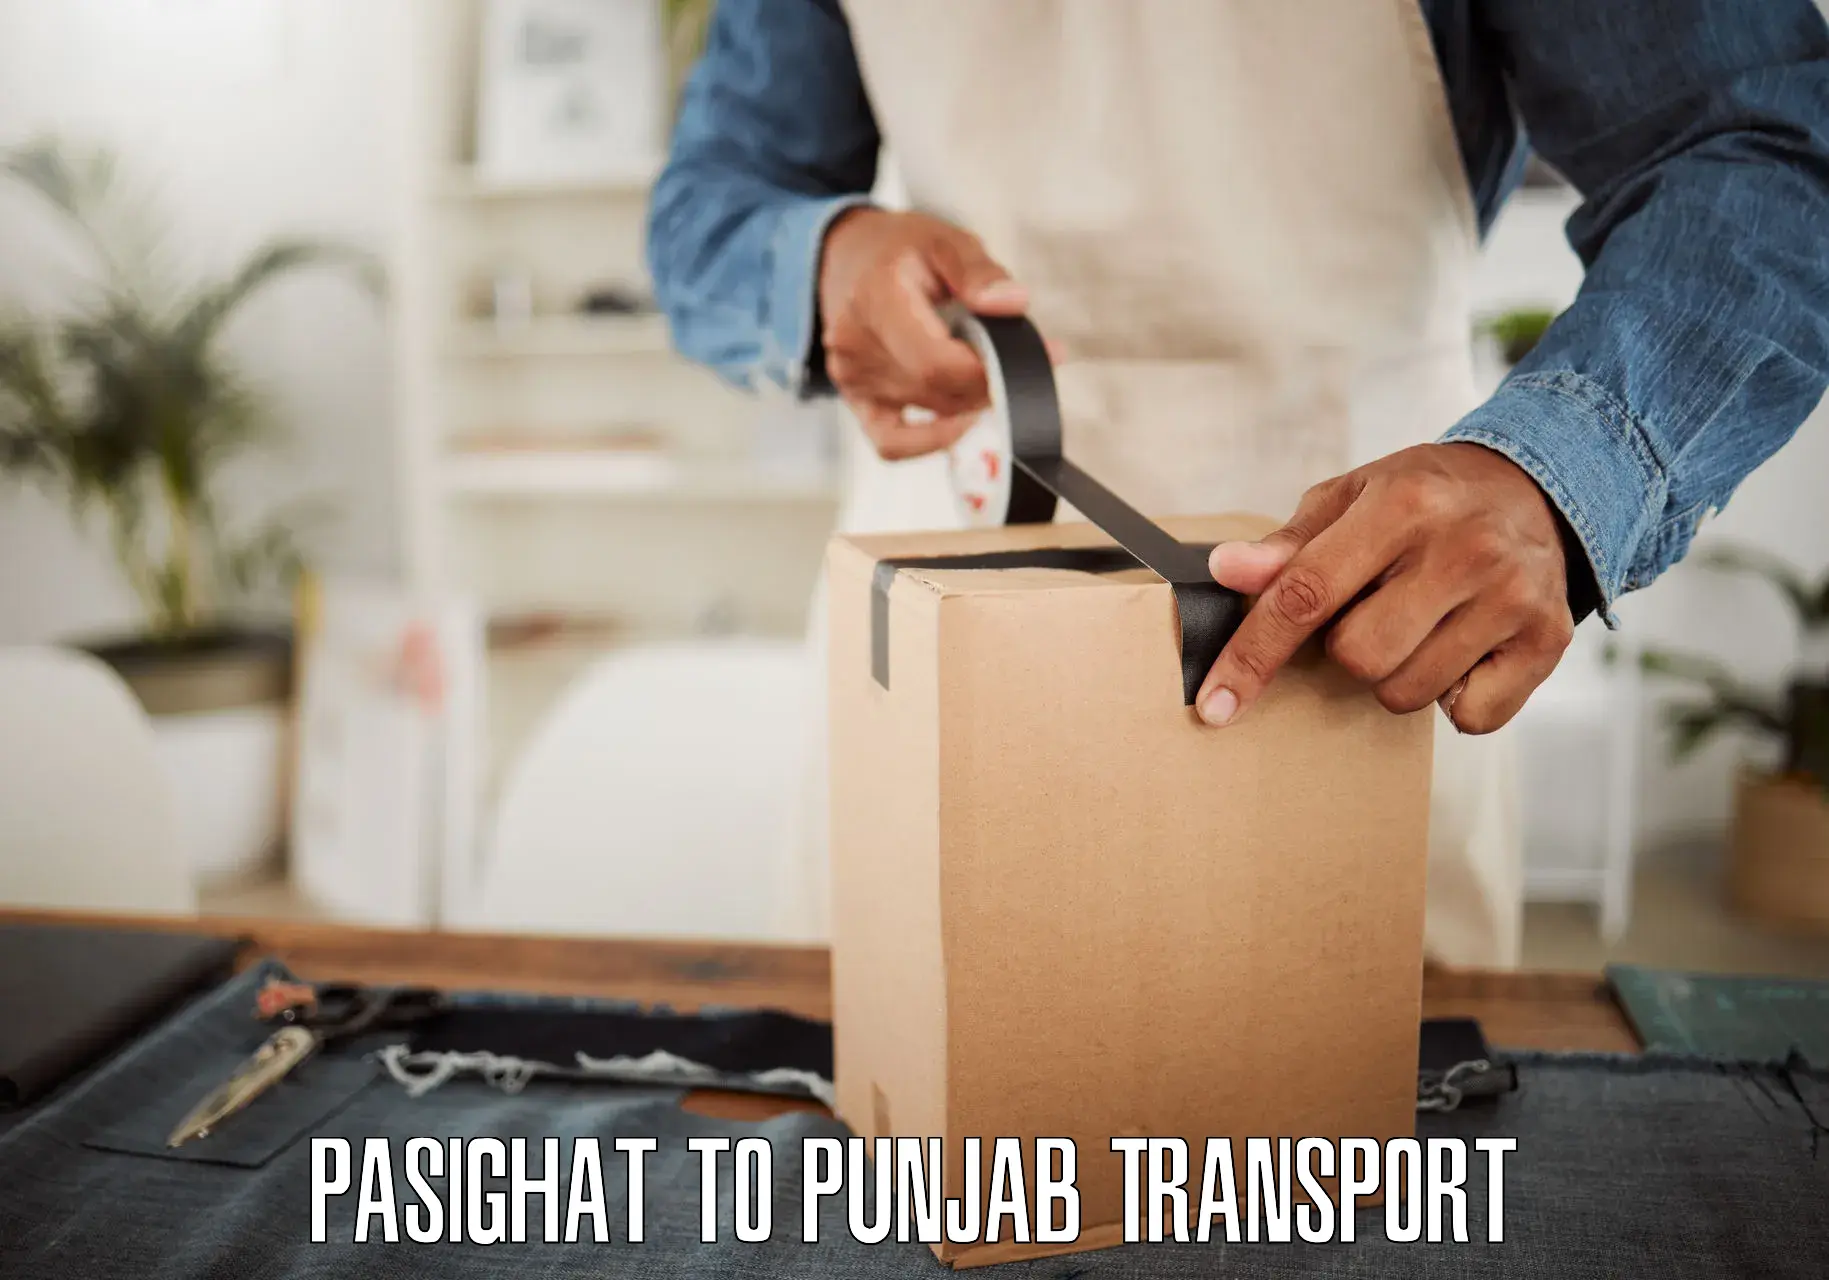 Online transport service Pasighat to Goindwal Sahib